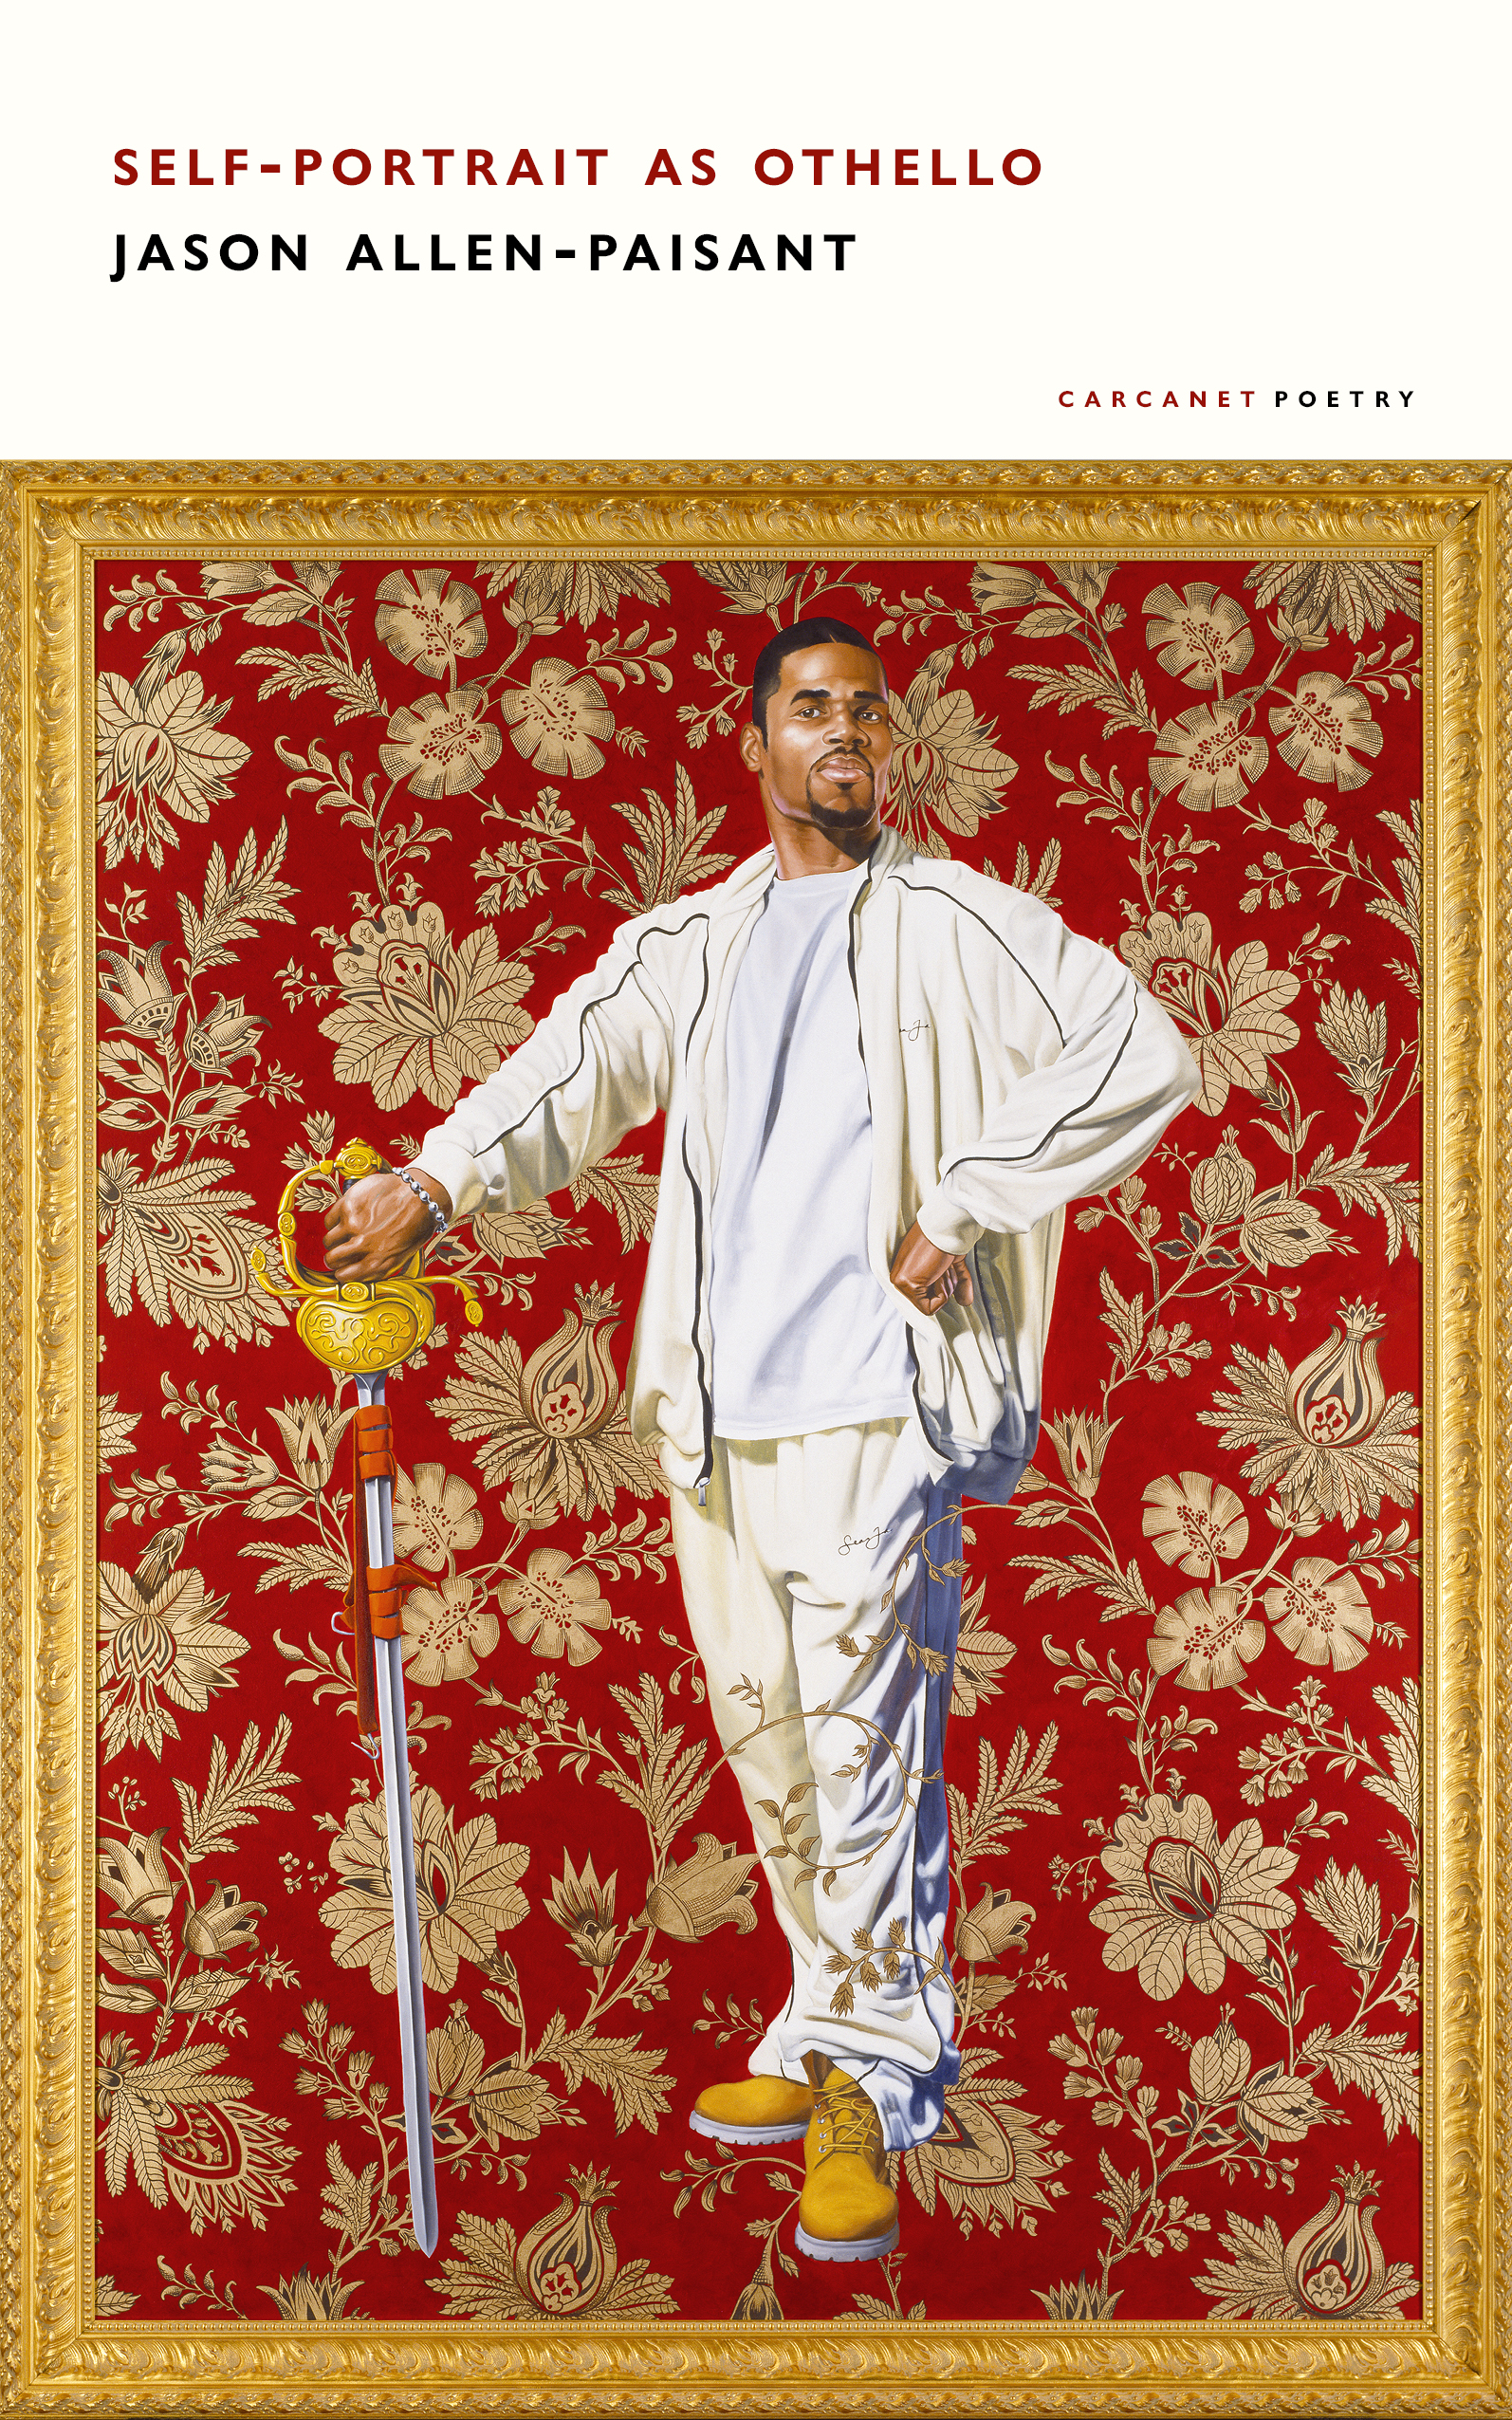 The cover of Jason Allen-Paisant's 'Self-Portrait as Othello'.